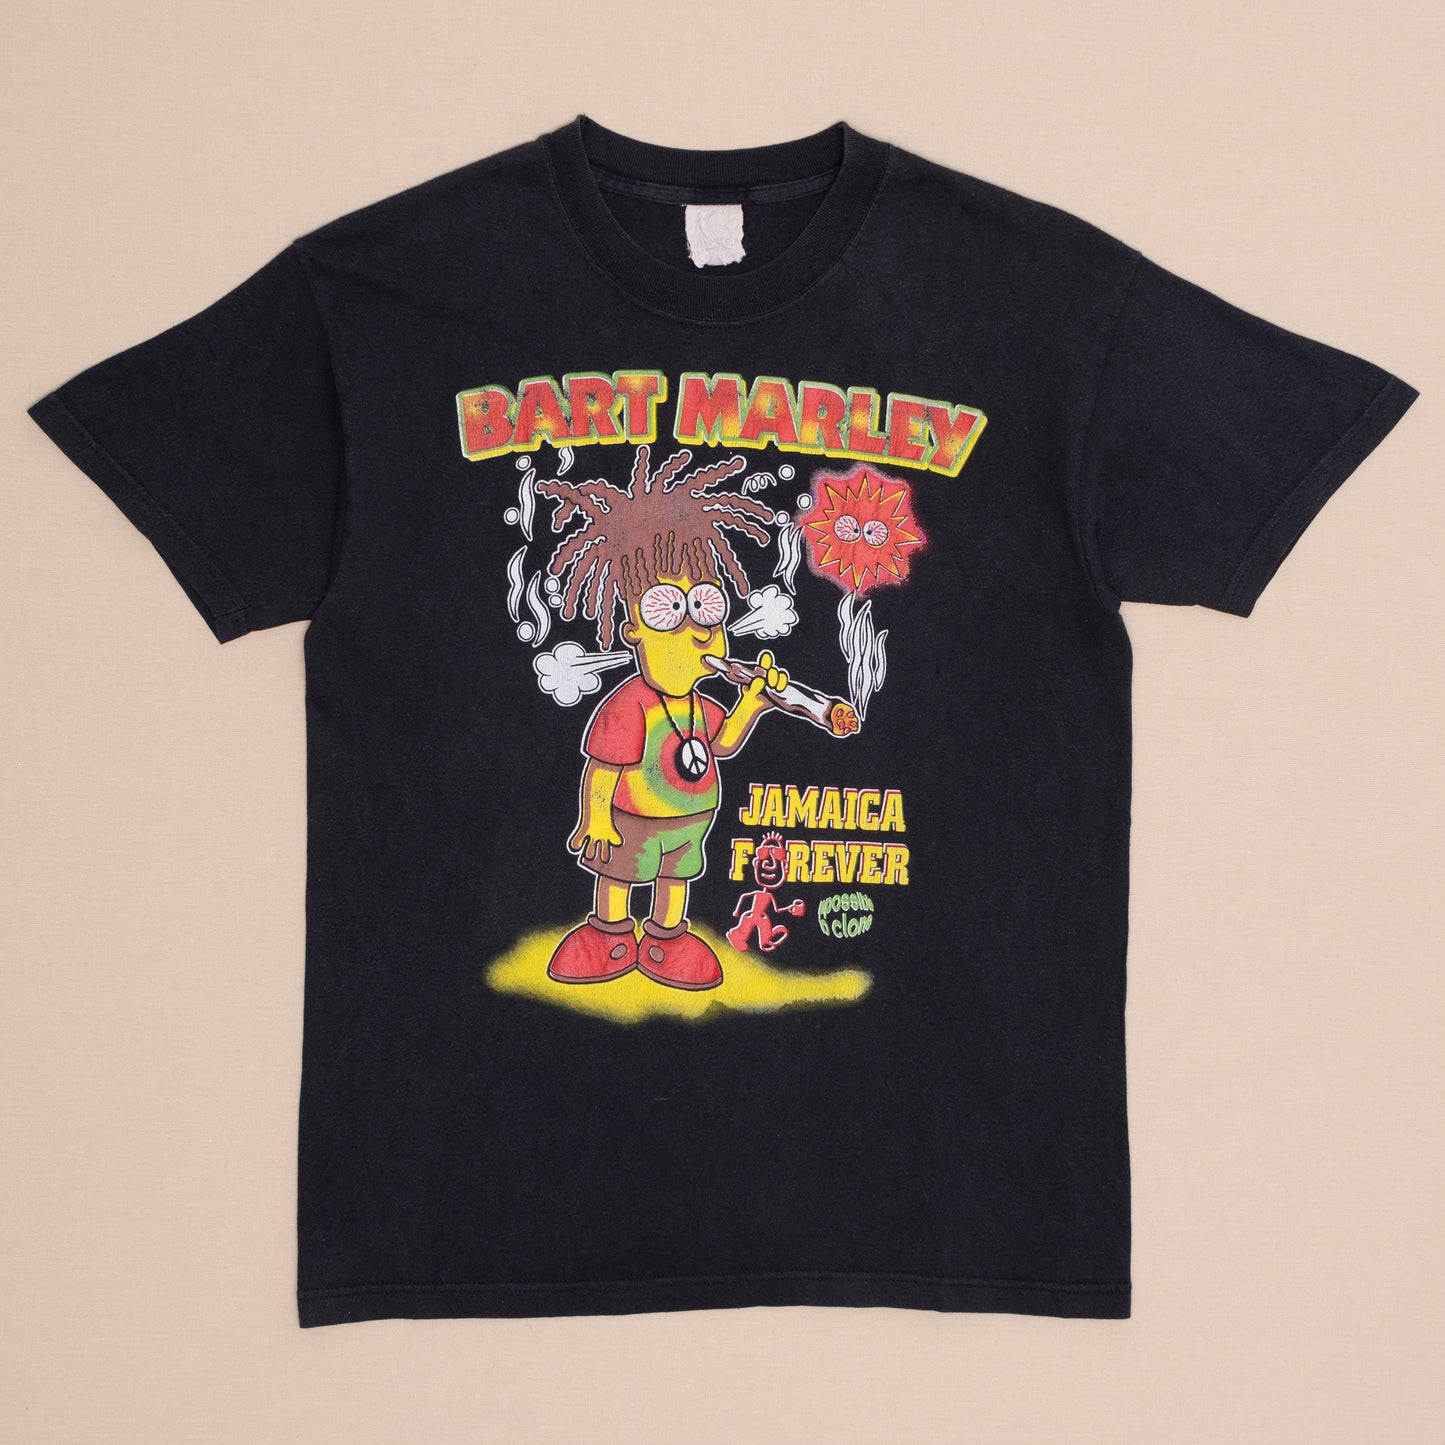 Bart Marley T Shirt, M